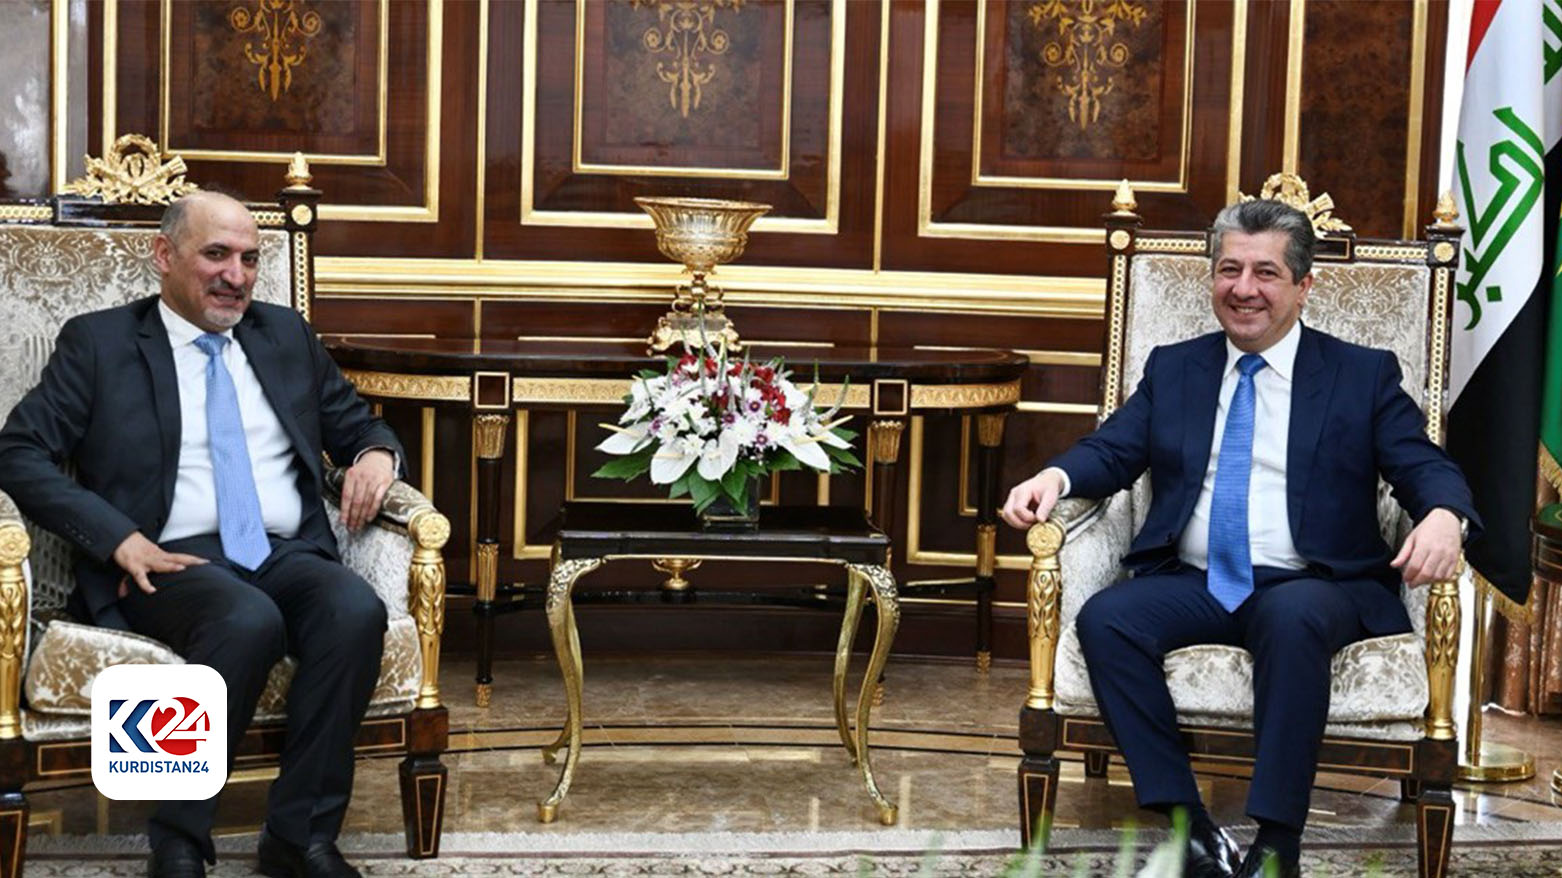 KDP President Masoud Barzani Meets British Ambassador in Baghdad